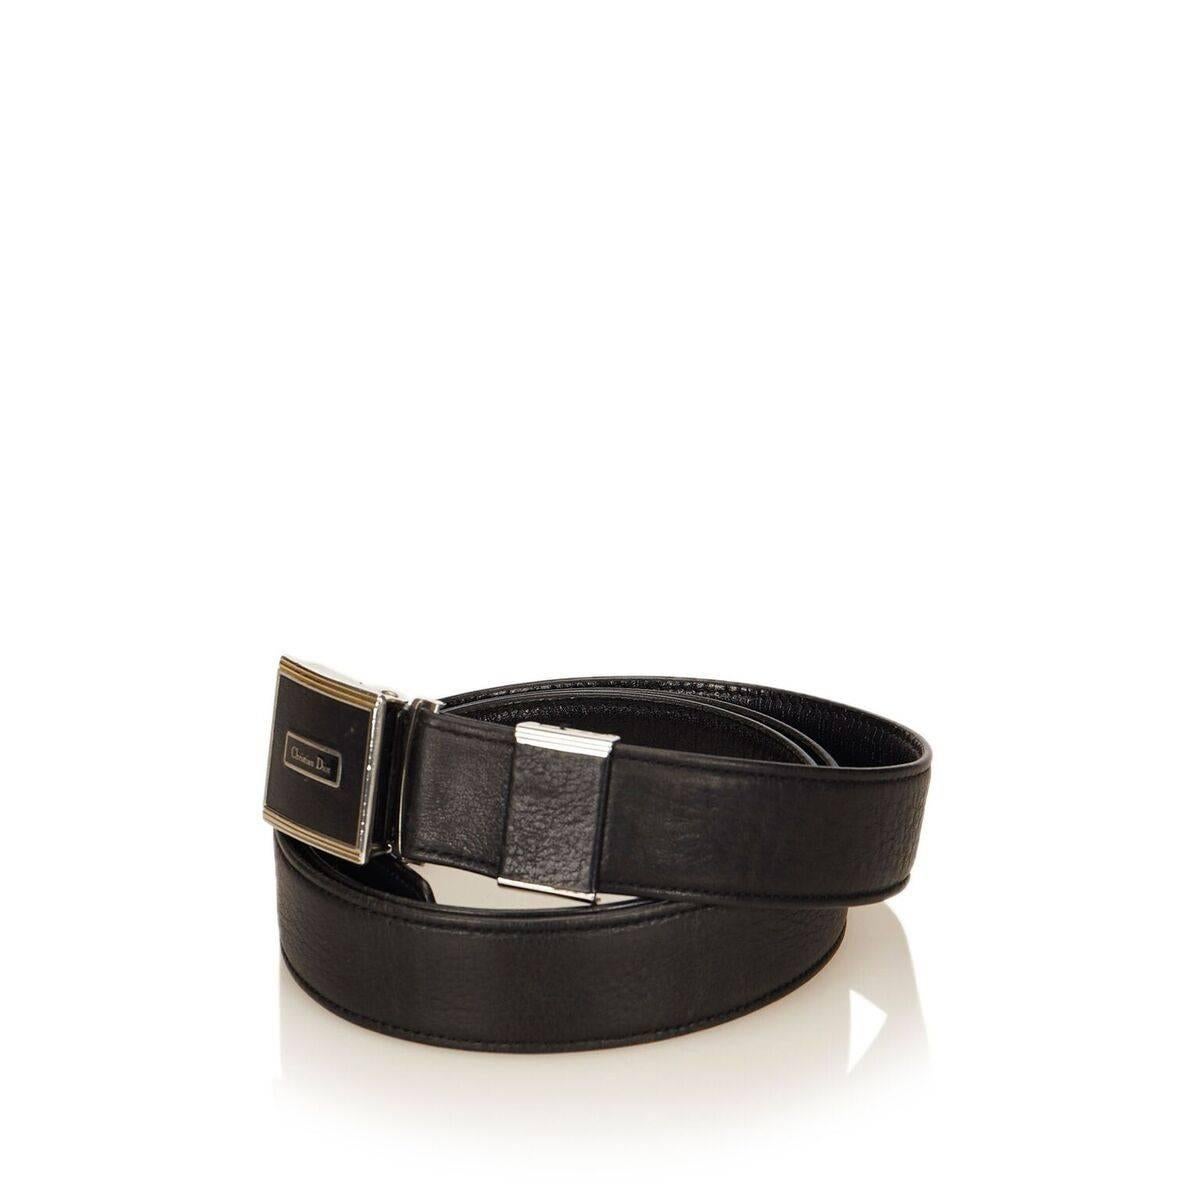 Product details:  Black leather Monsieur belt by Christian Dior.  Adjustable buckle closure.  Silver and goldtone hardware.  44